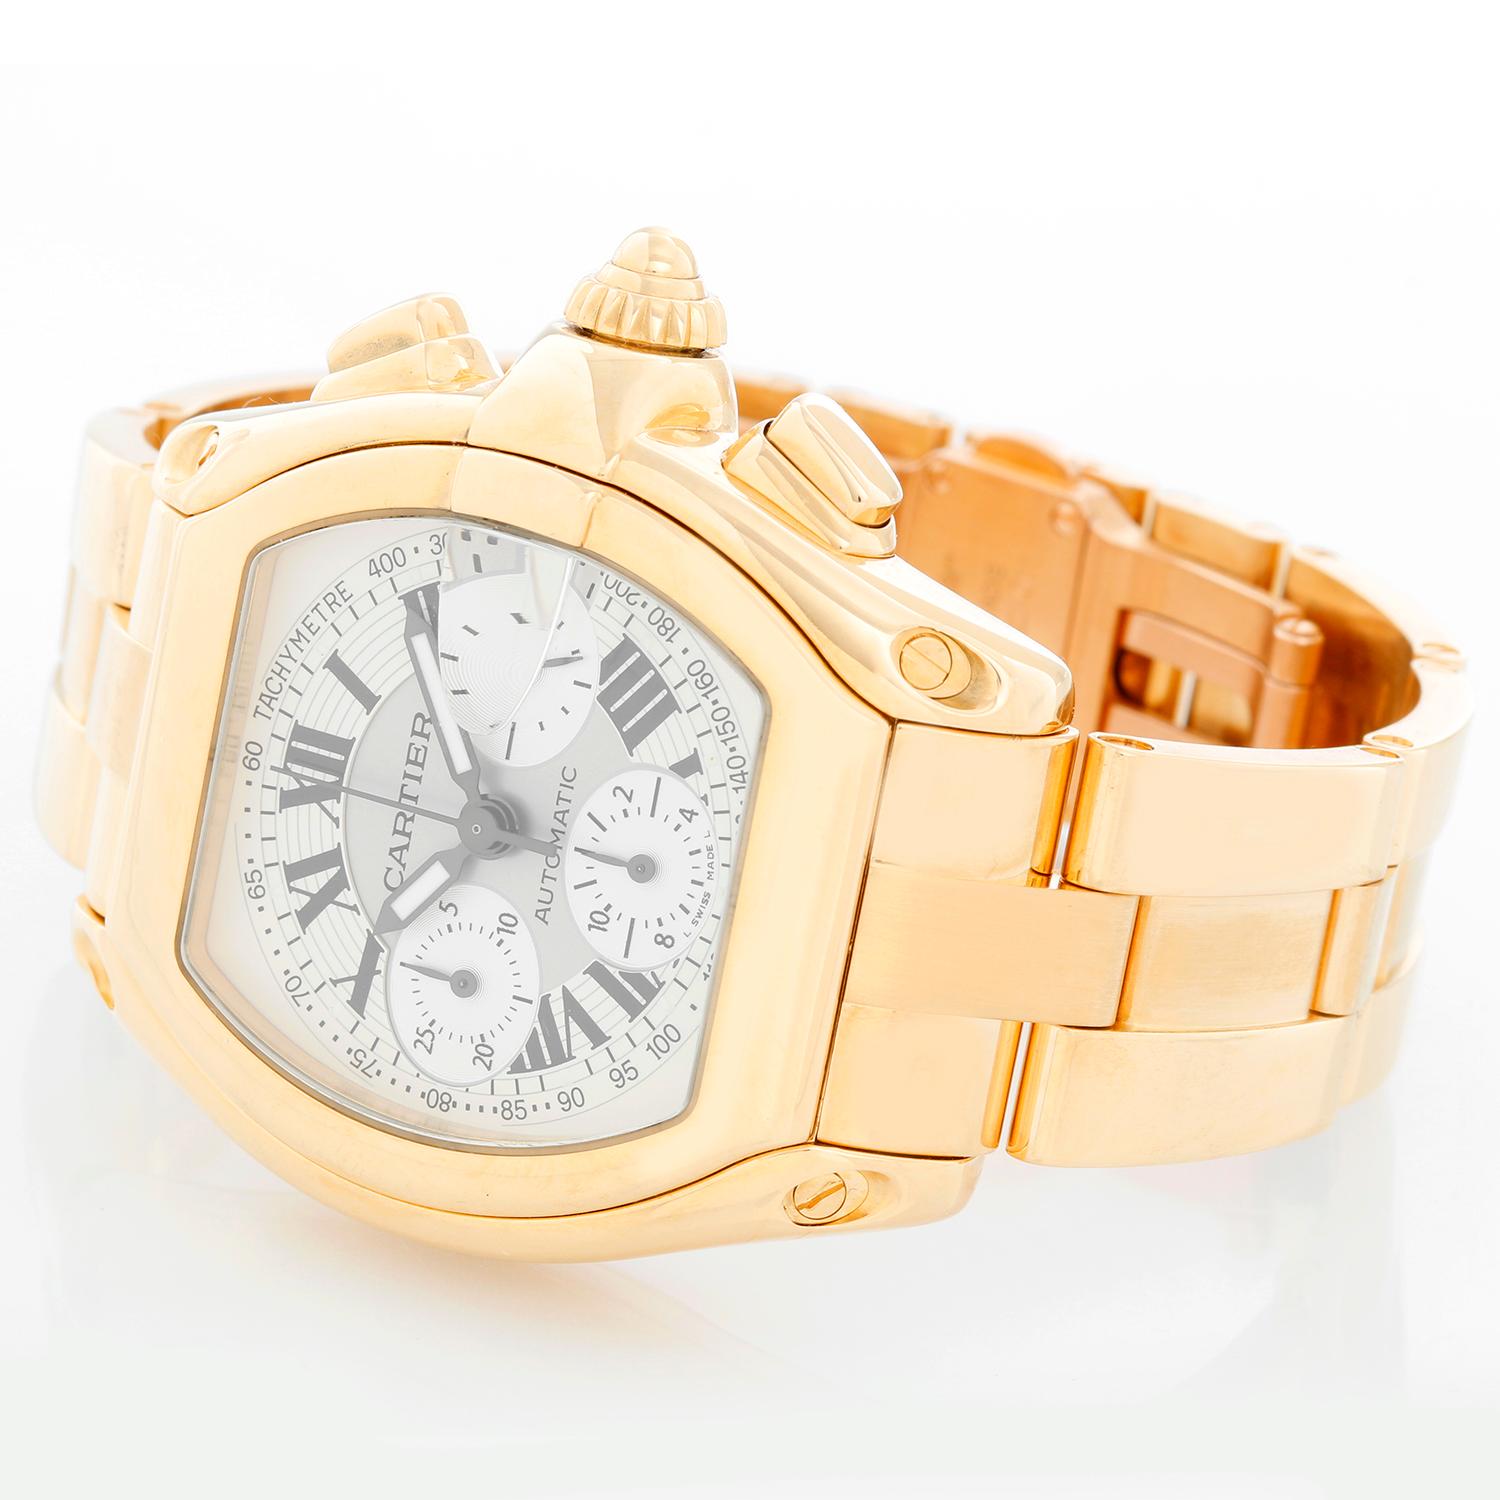 Cartier Roadster Chronograph 18 Karat Yellow Gold Men's Watch W62021Y2 2